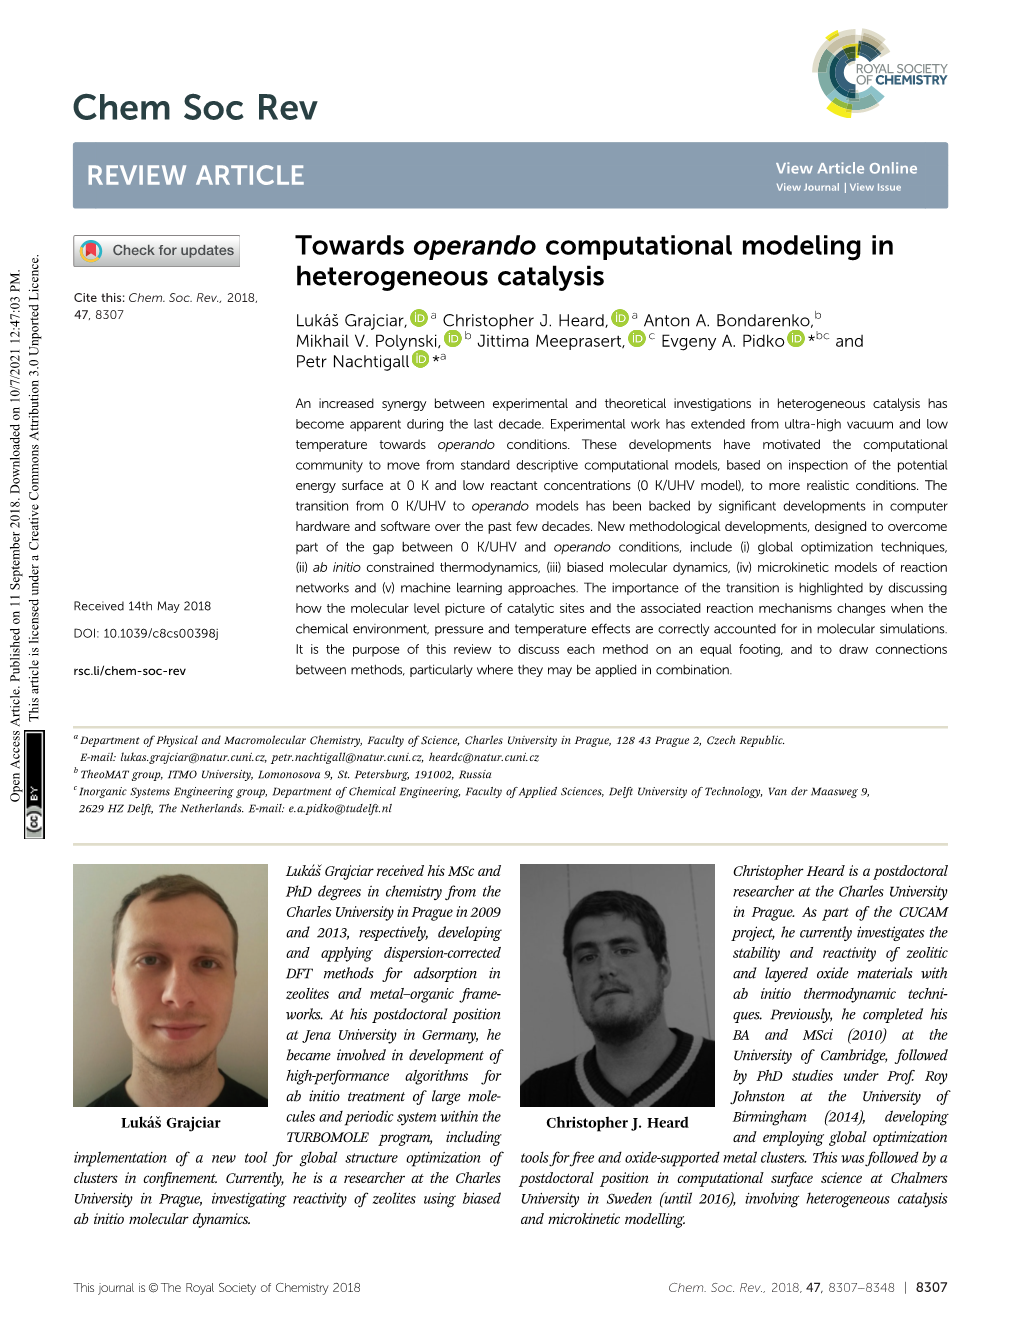 Towards Operando Computational Modeling in Heterogeneous Catalysis Cite This: Chem